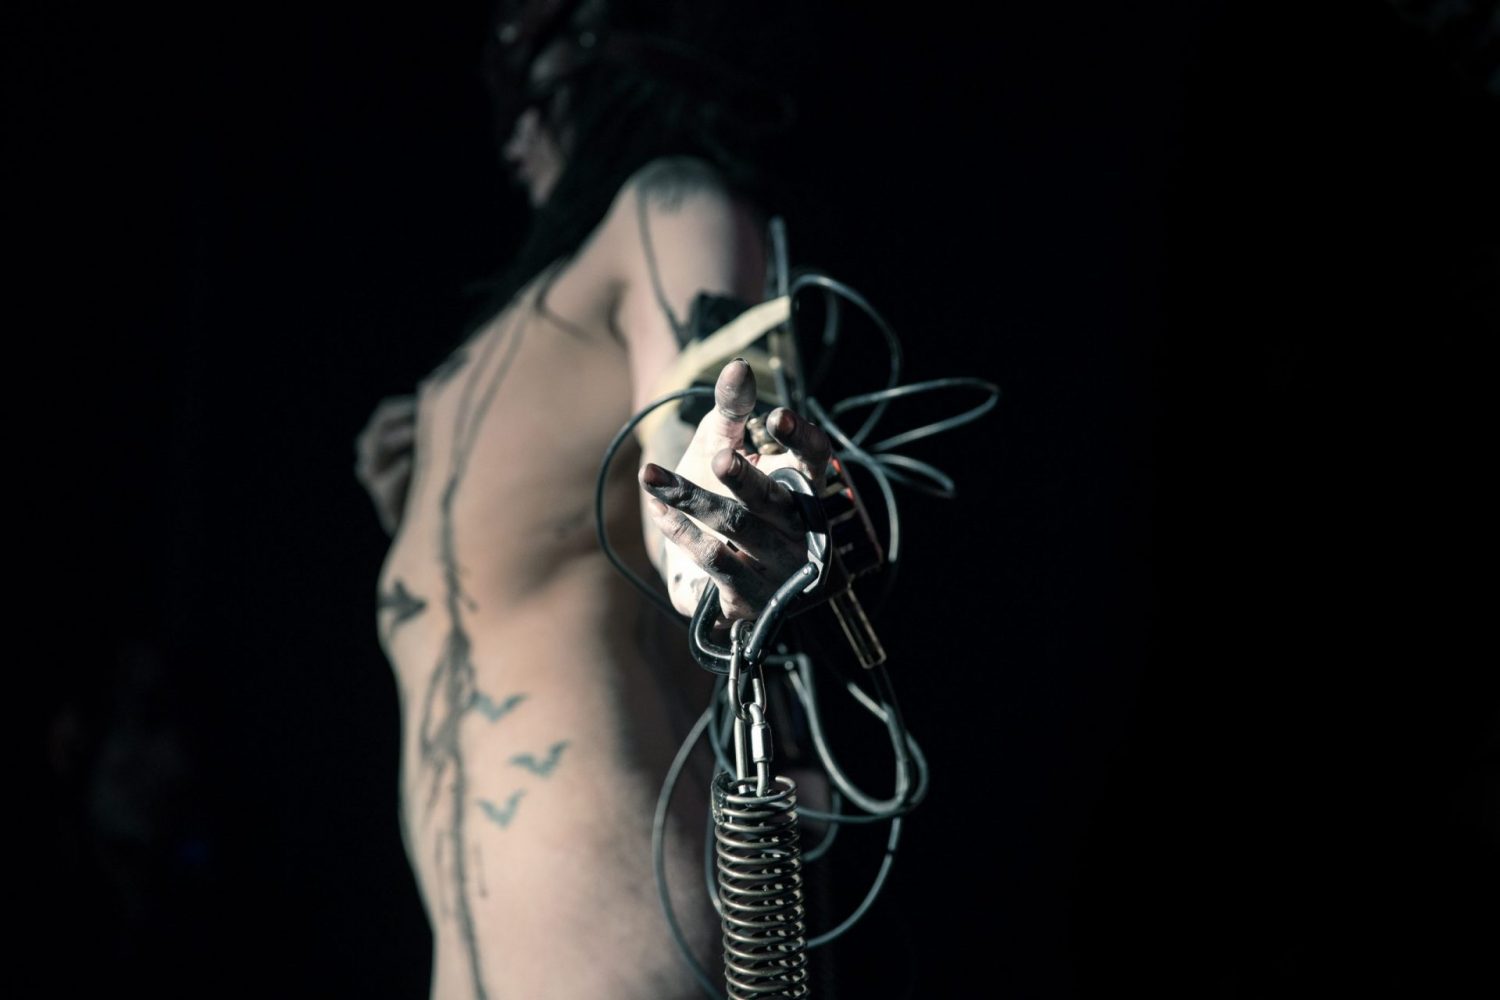 Experimental music, Body Art Ritual, Performance Art